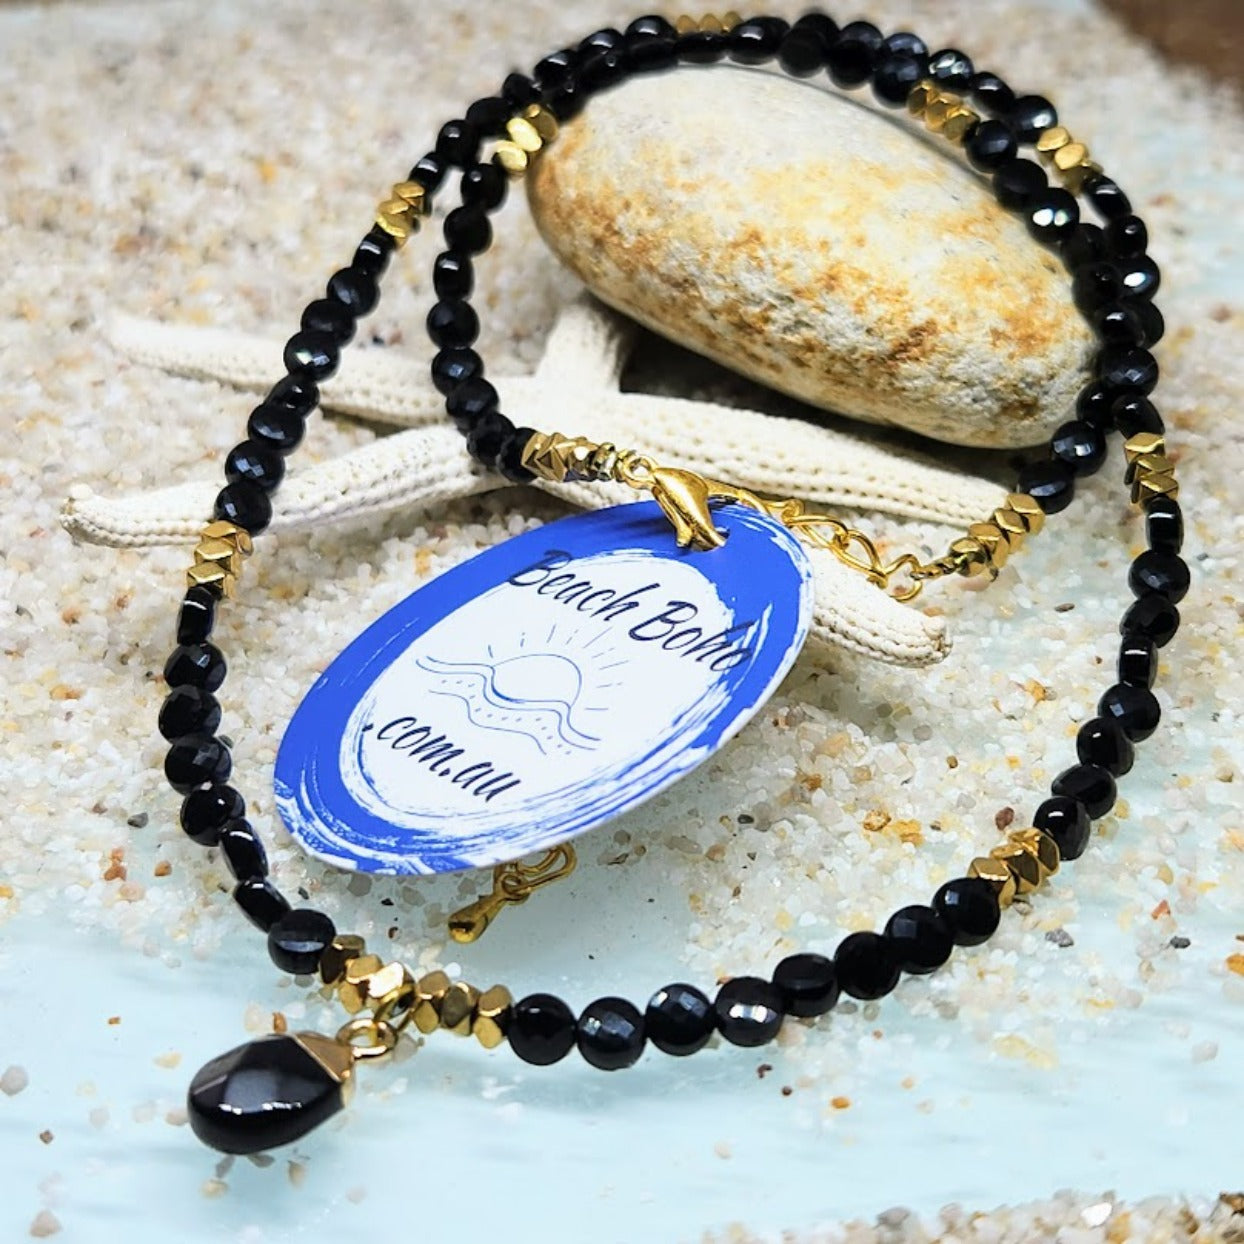 BLACK GOLD - ONYX HEMITITE CHARM NECKLACE - Premium necklaces from www.beachboho.com.au - Just $80! Shop now at www.beachboho.com.au